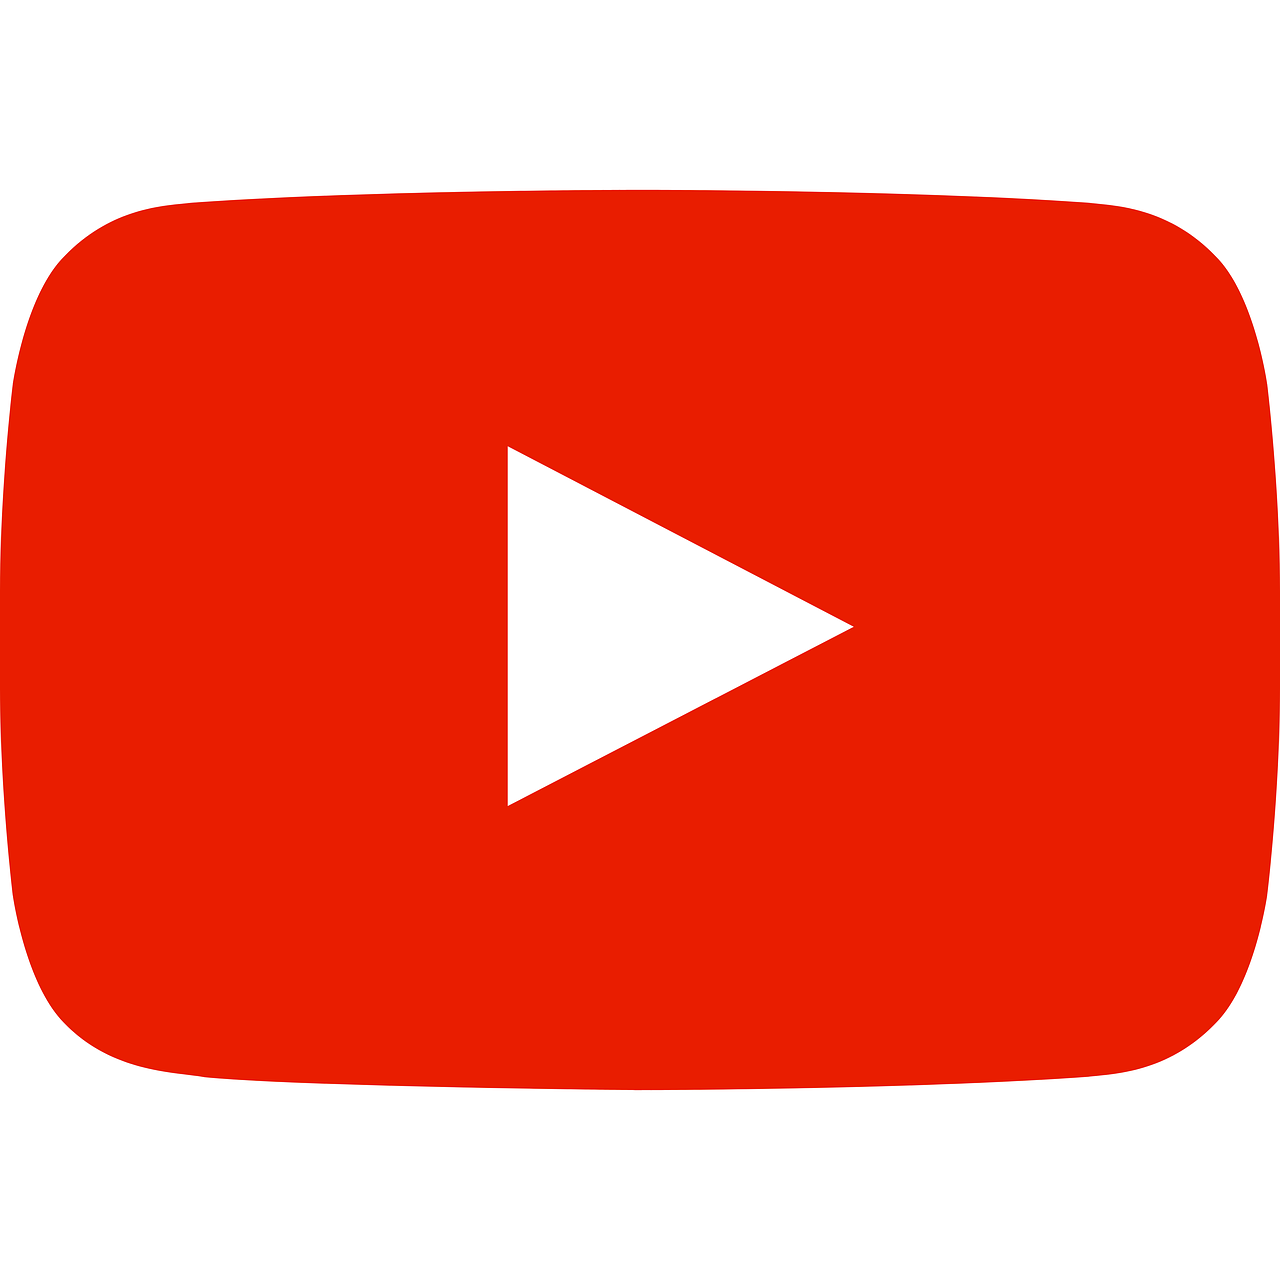 pixabay videos youtube